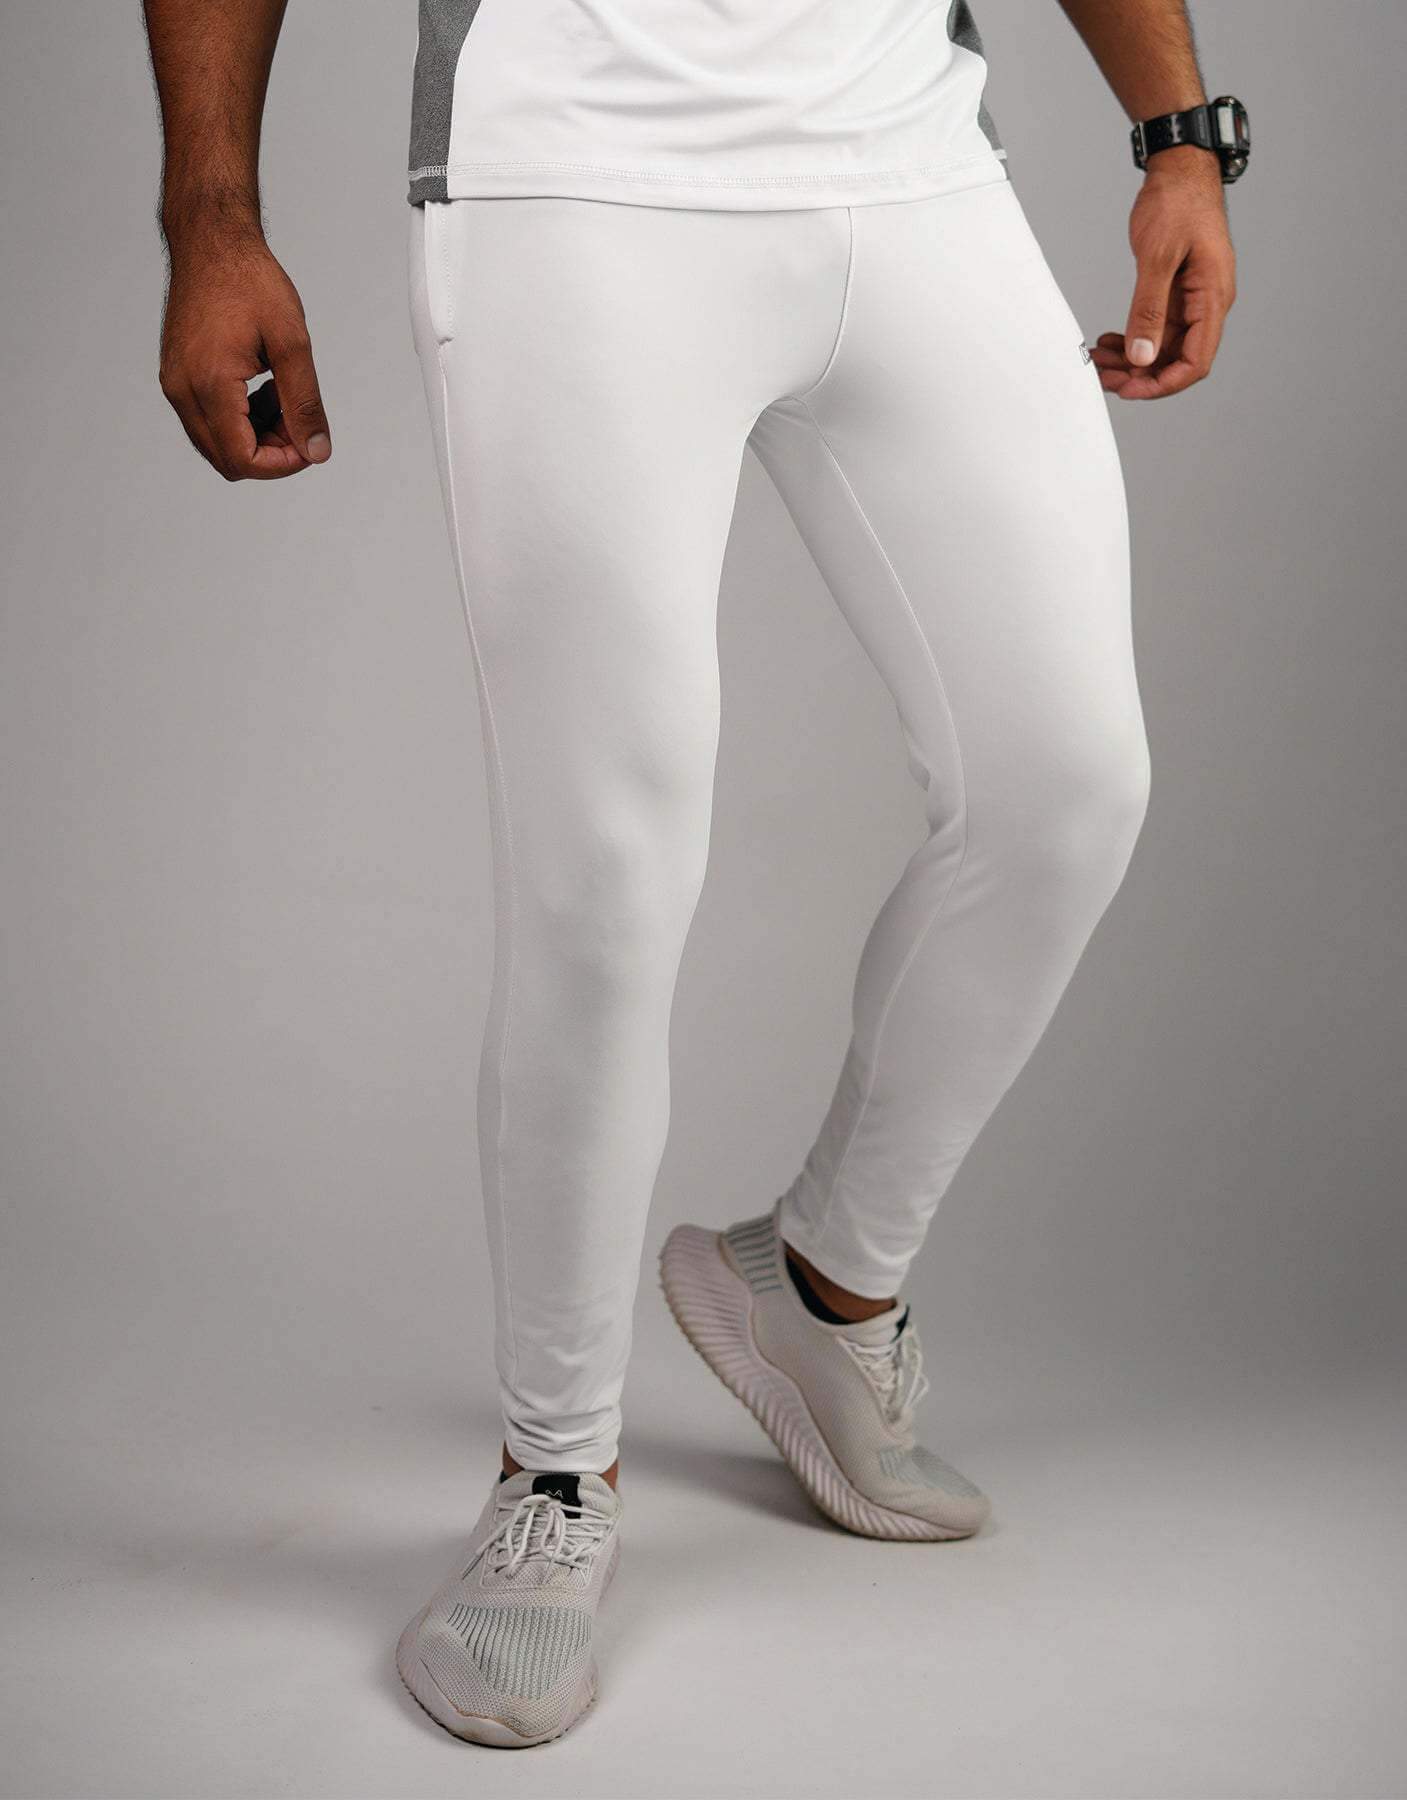 Men's Compression Legging - White – Bodybrics